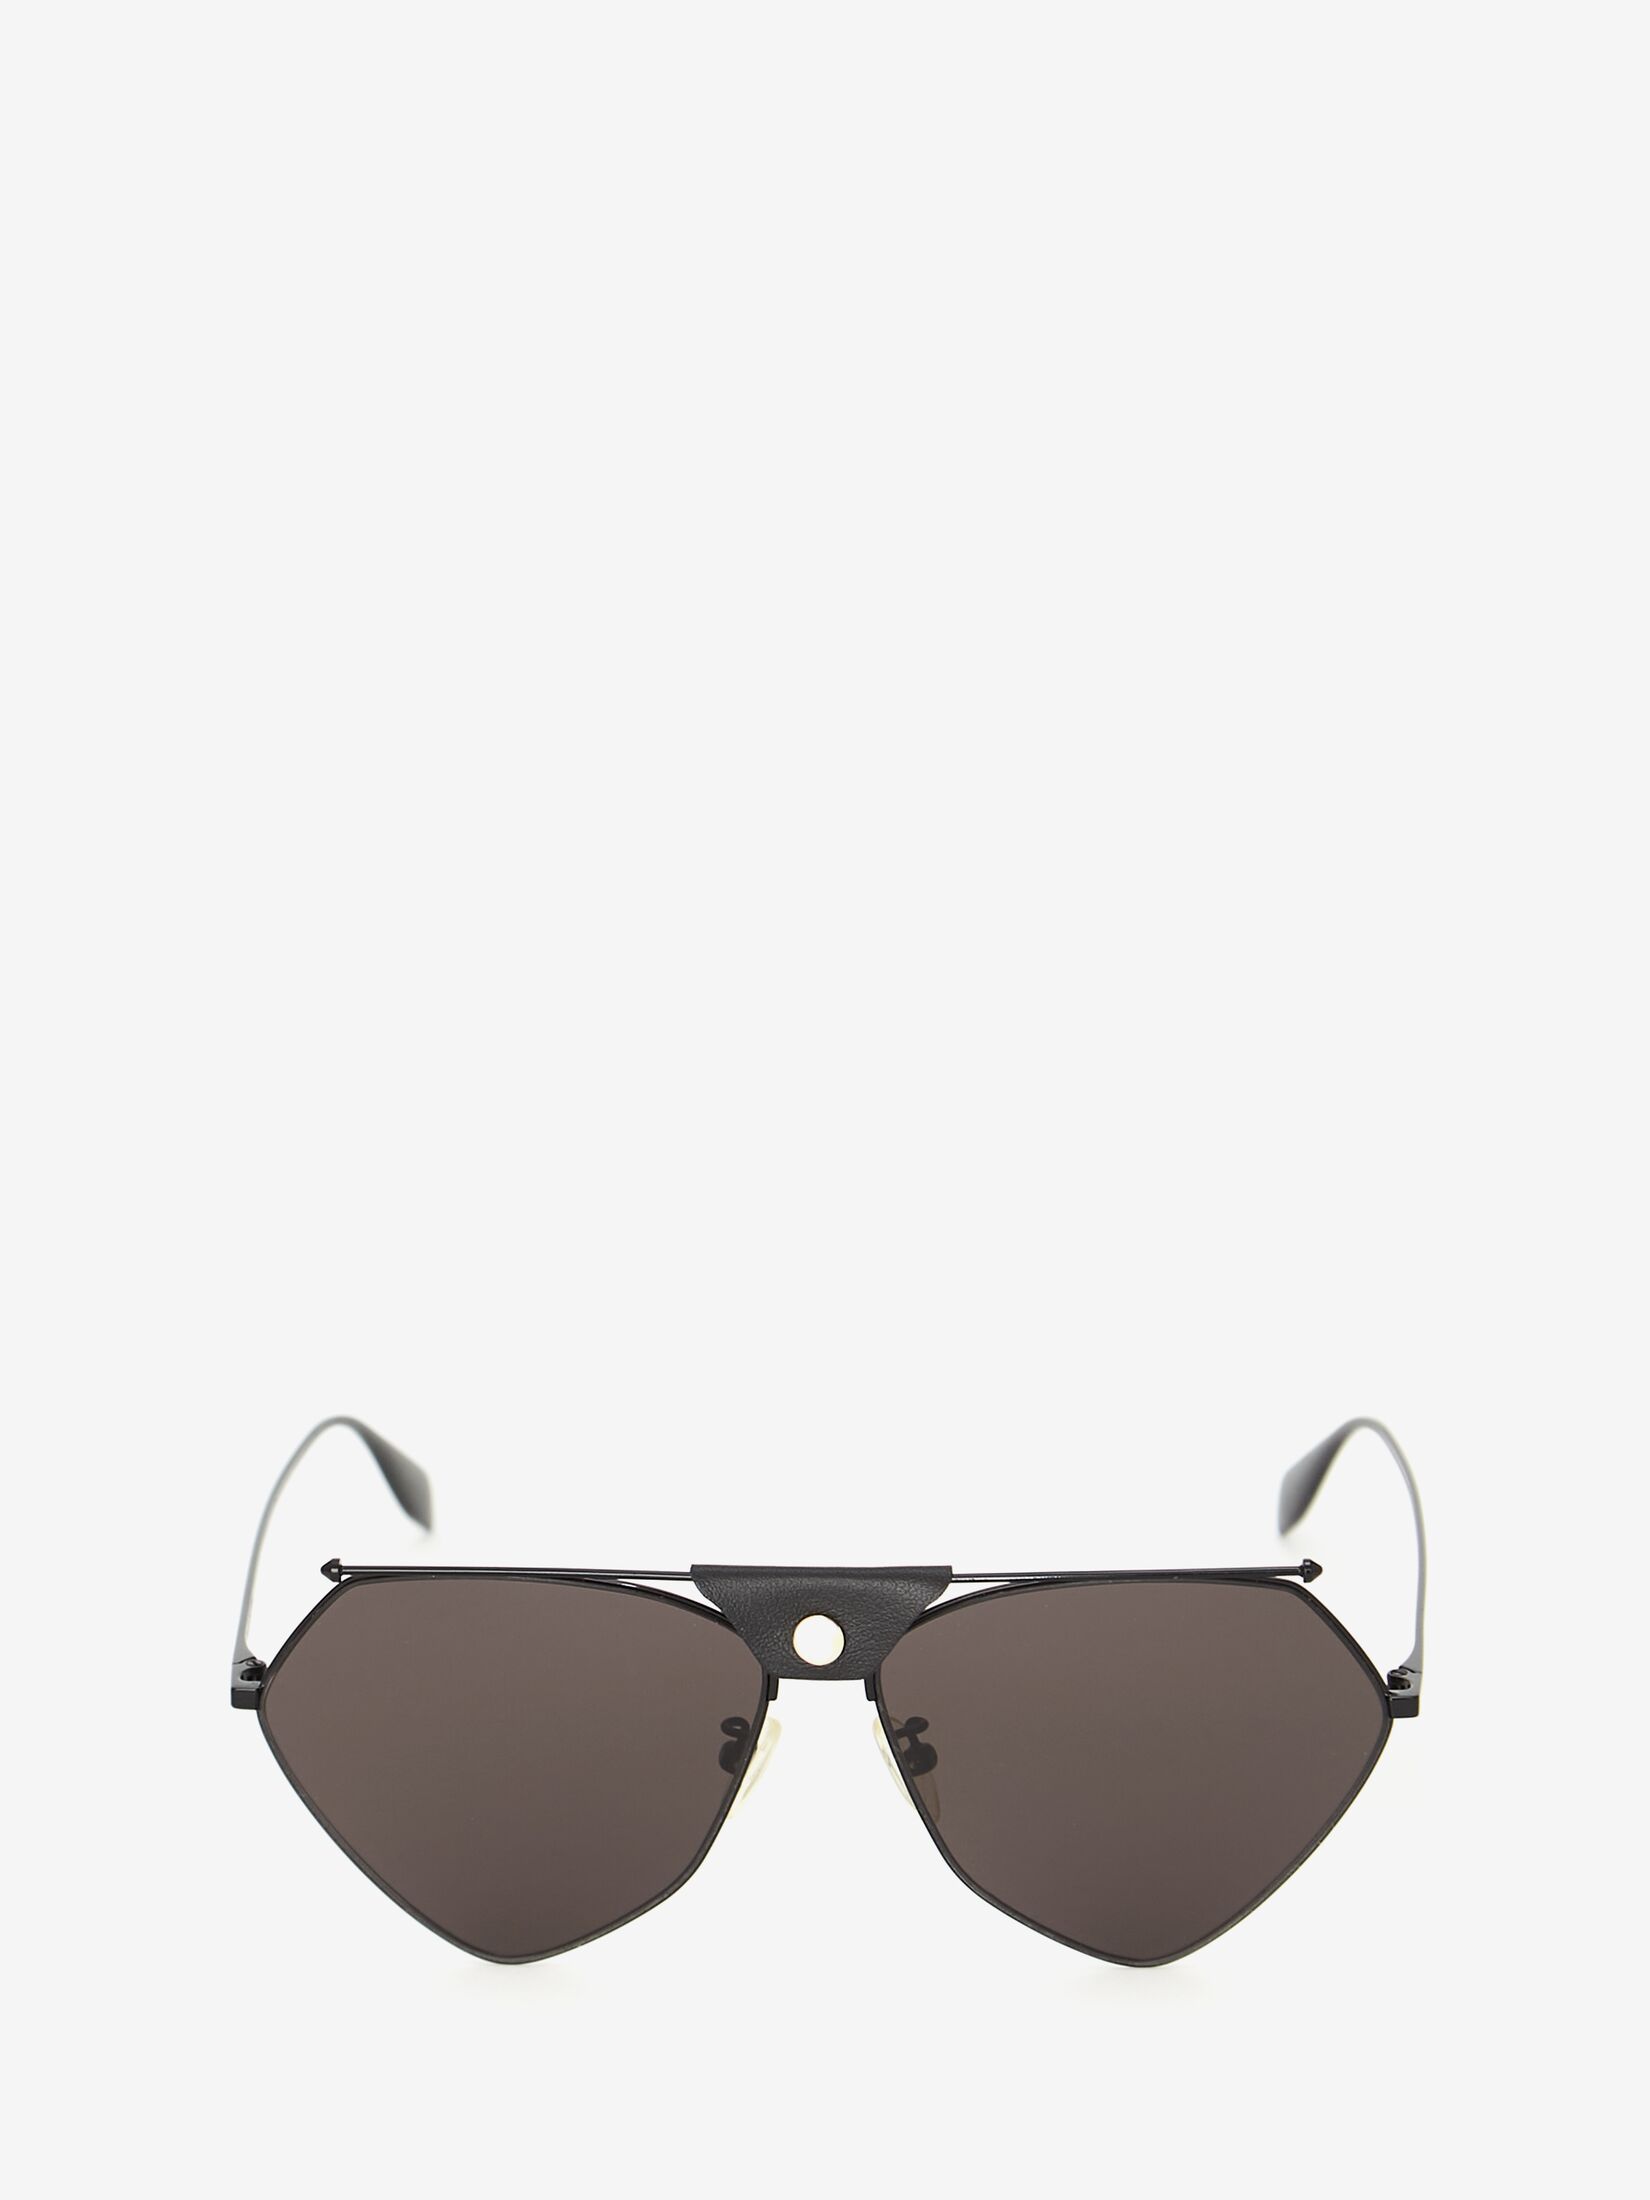 Top Piercing Sunglasses